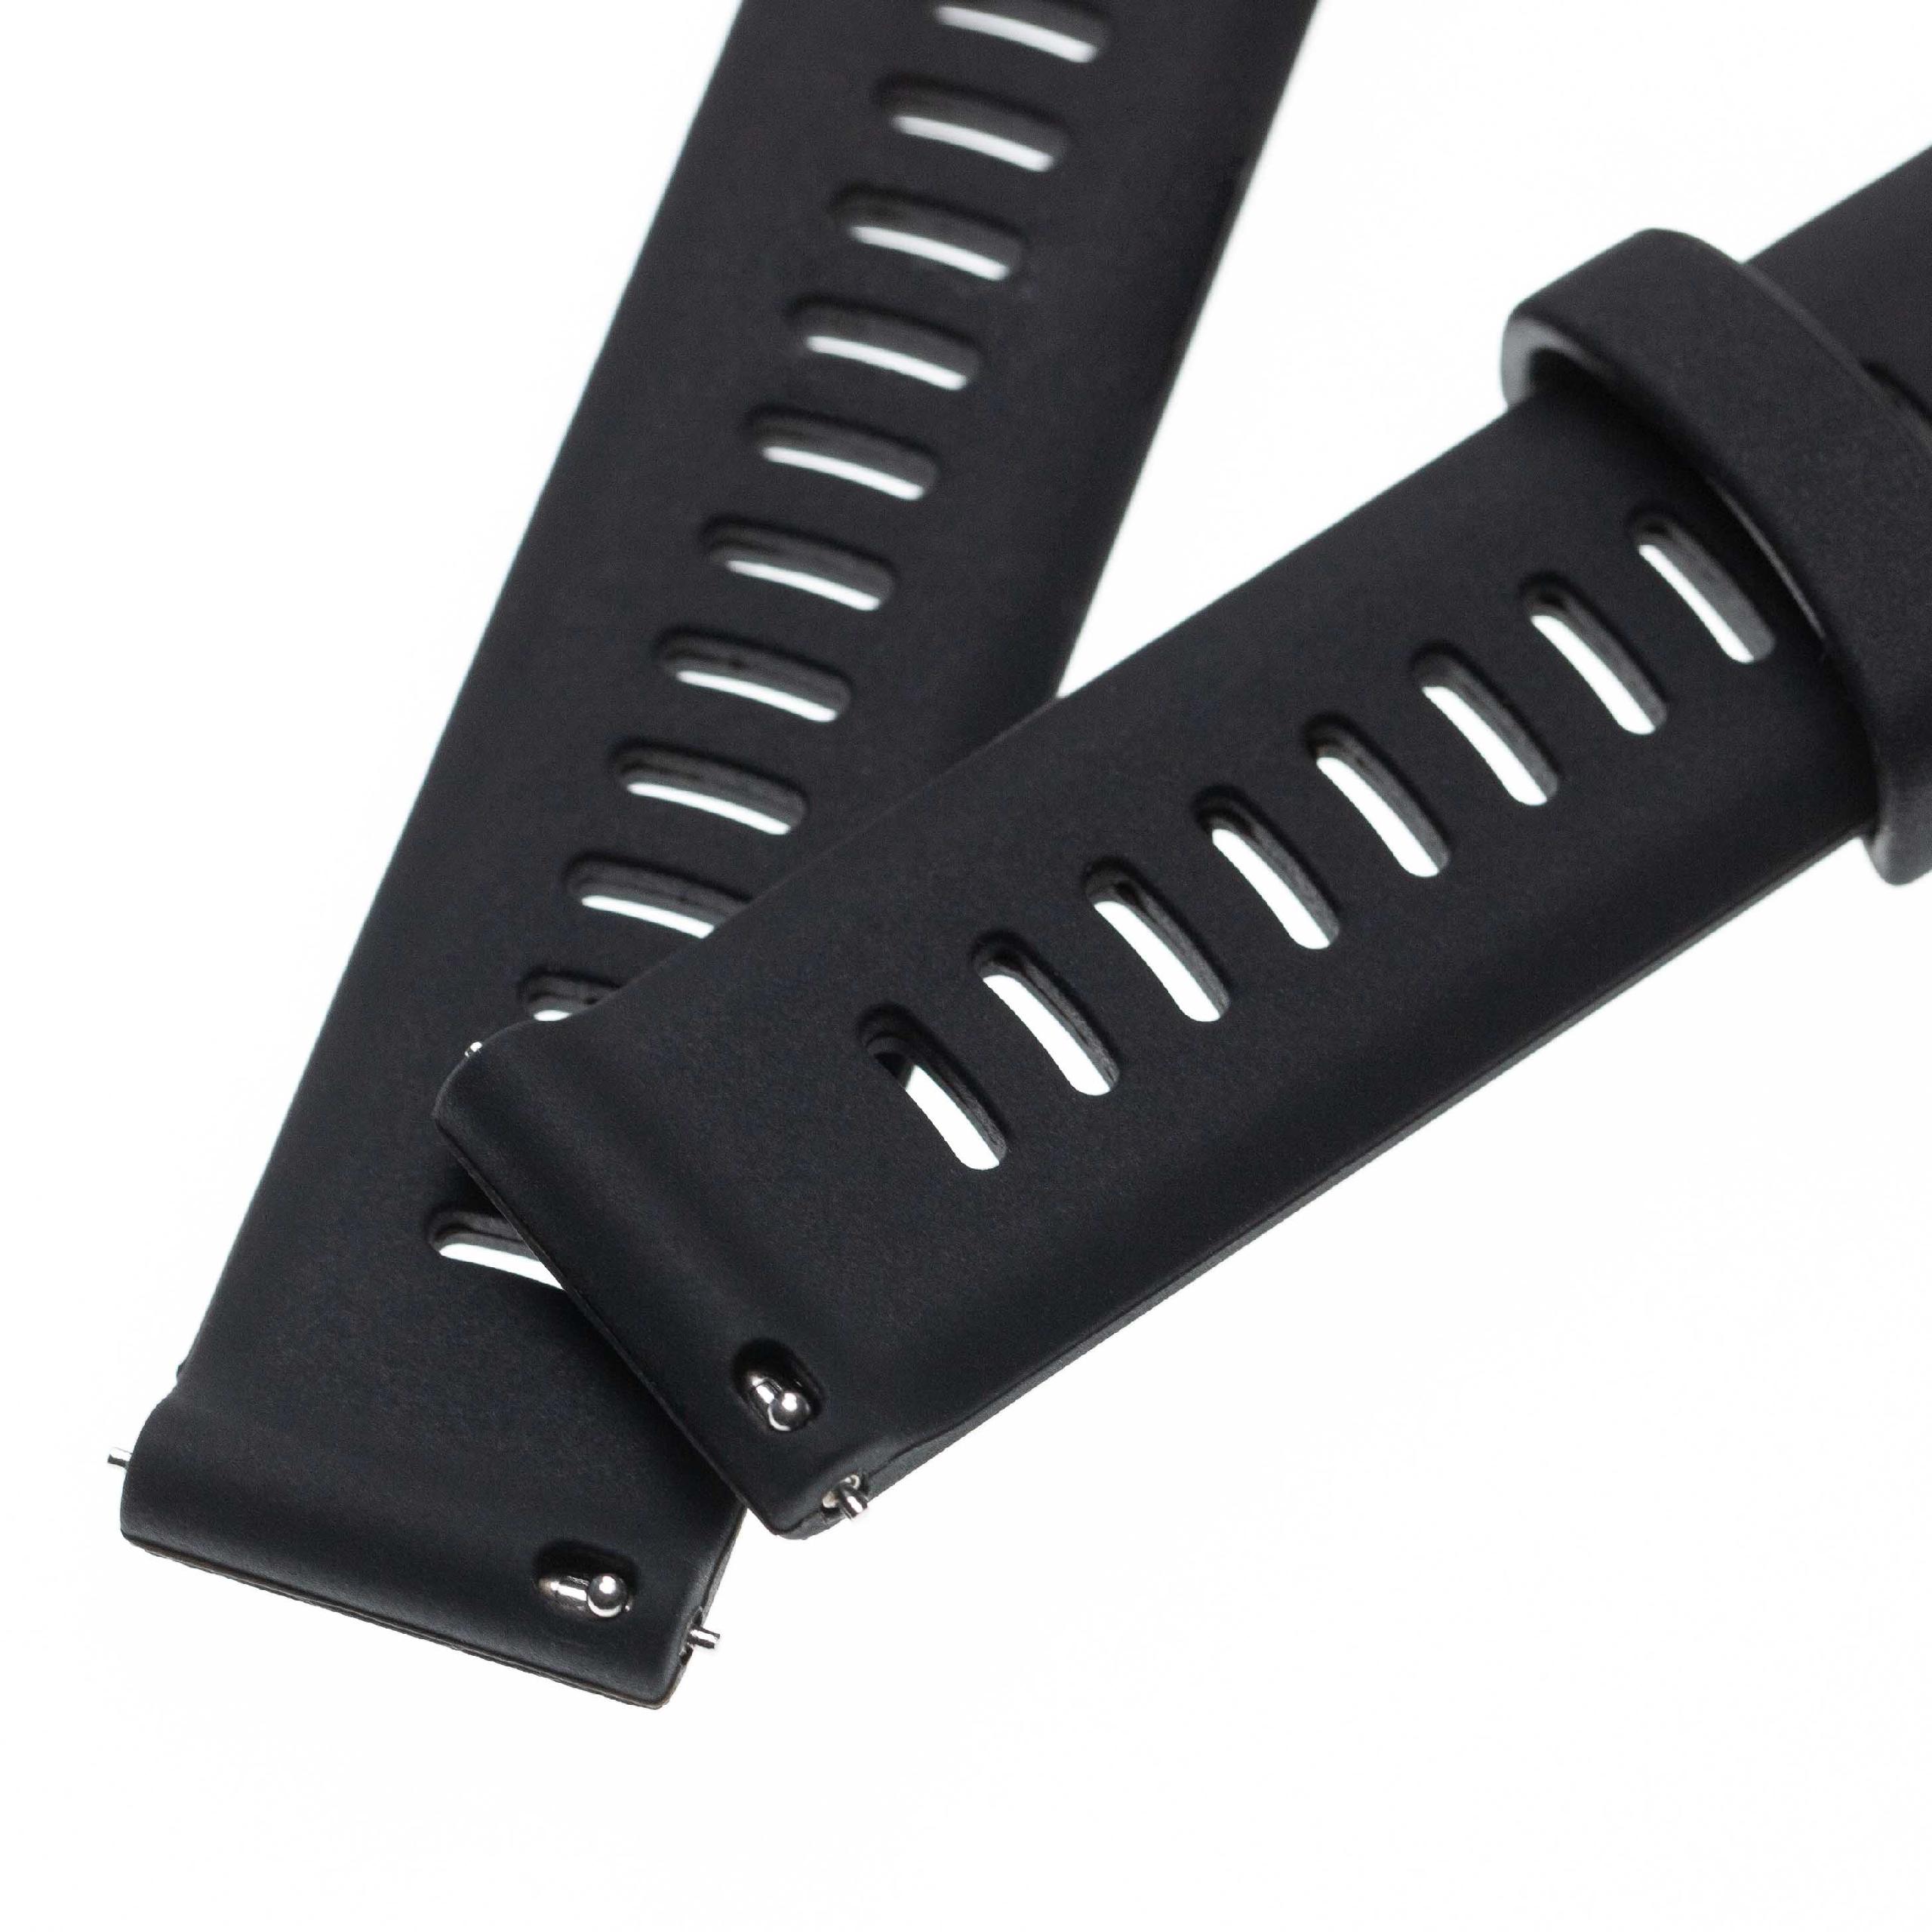 wristband for Garmin Forerunner Smartwatch - 11 + 8.5 cm long, silicone, black